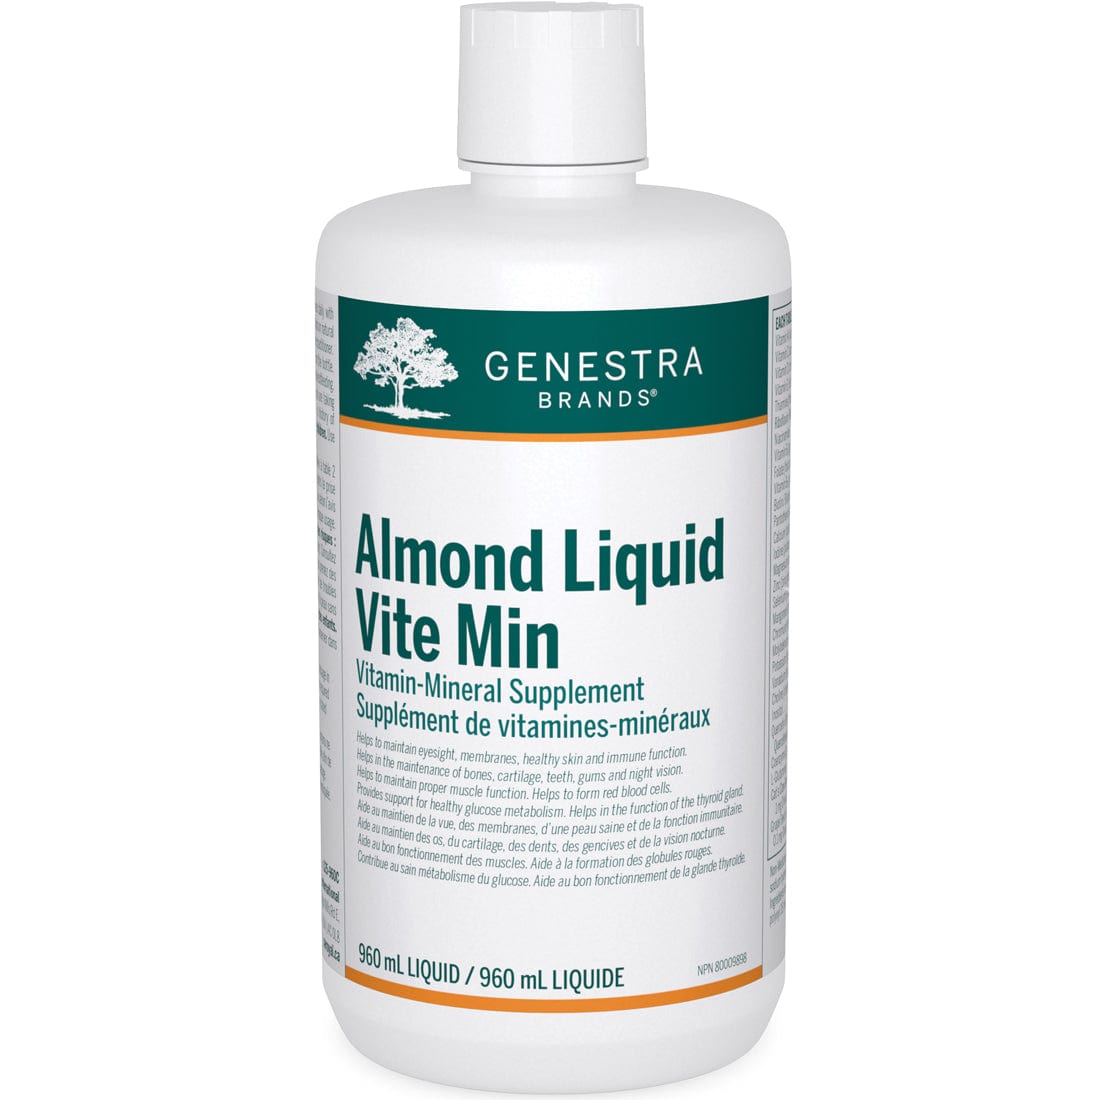 Genestra Almond Liquid Vite Min, 960ml